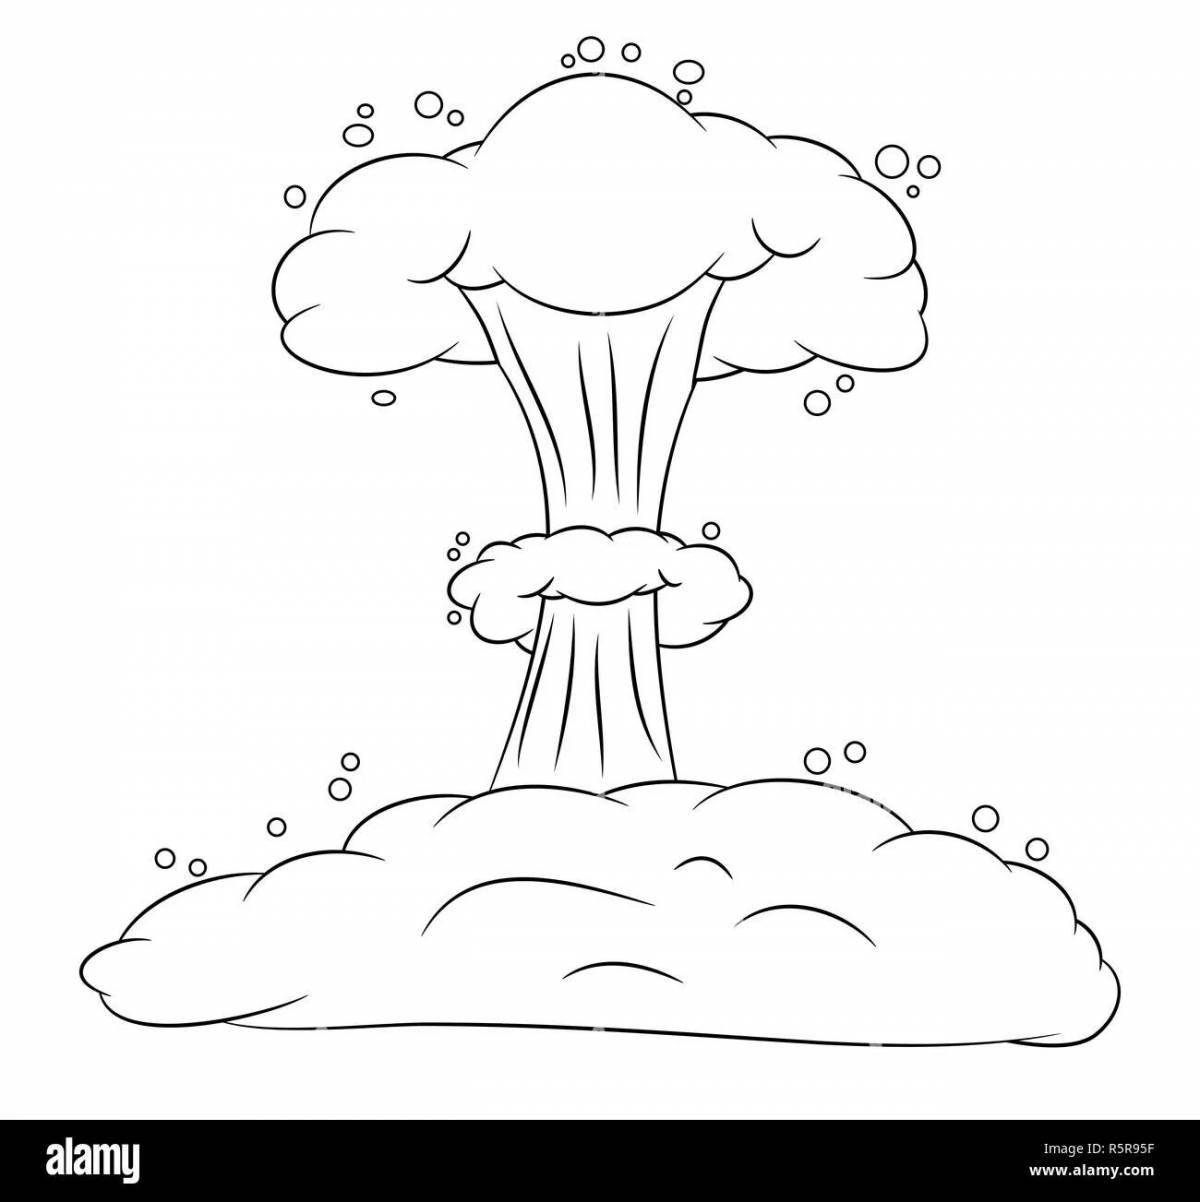 Atomic bomb #10